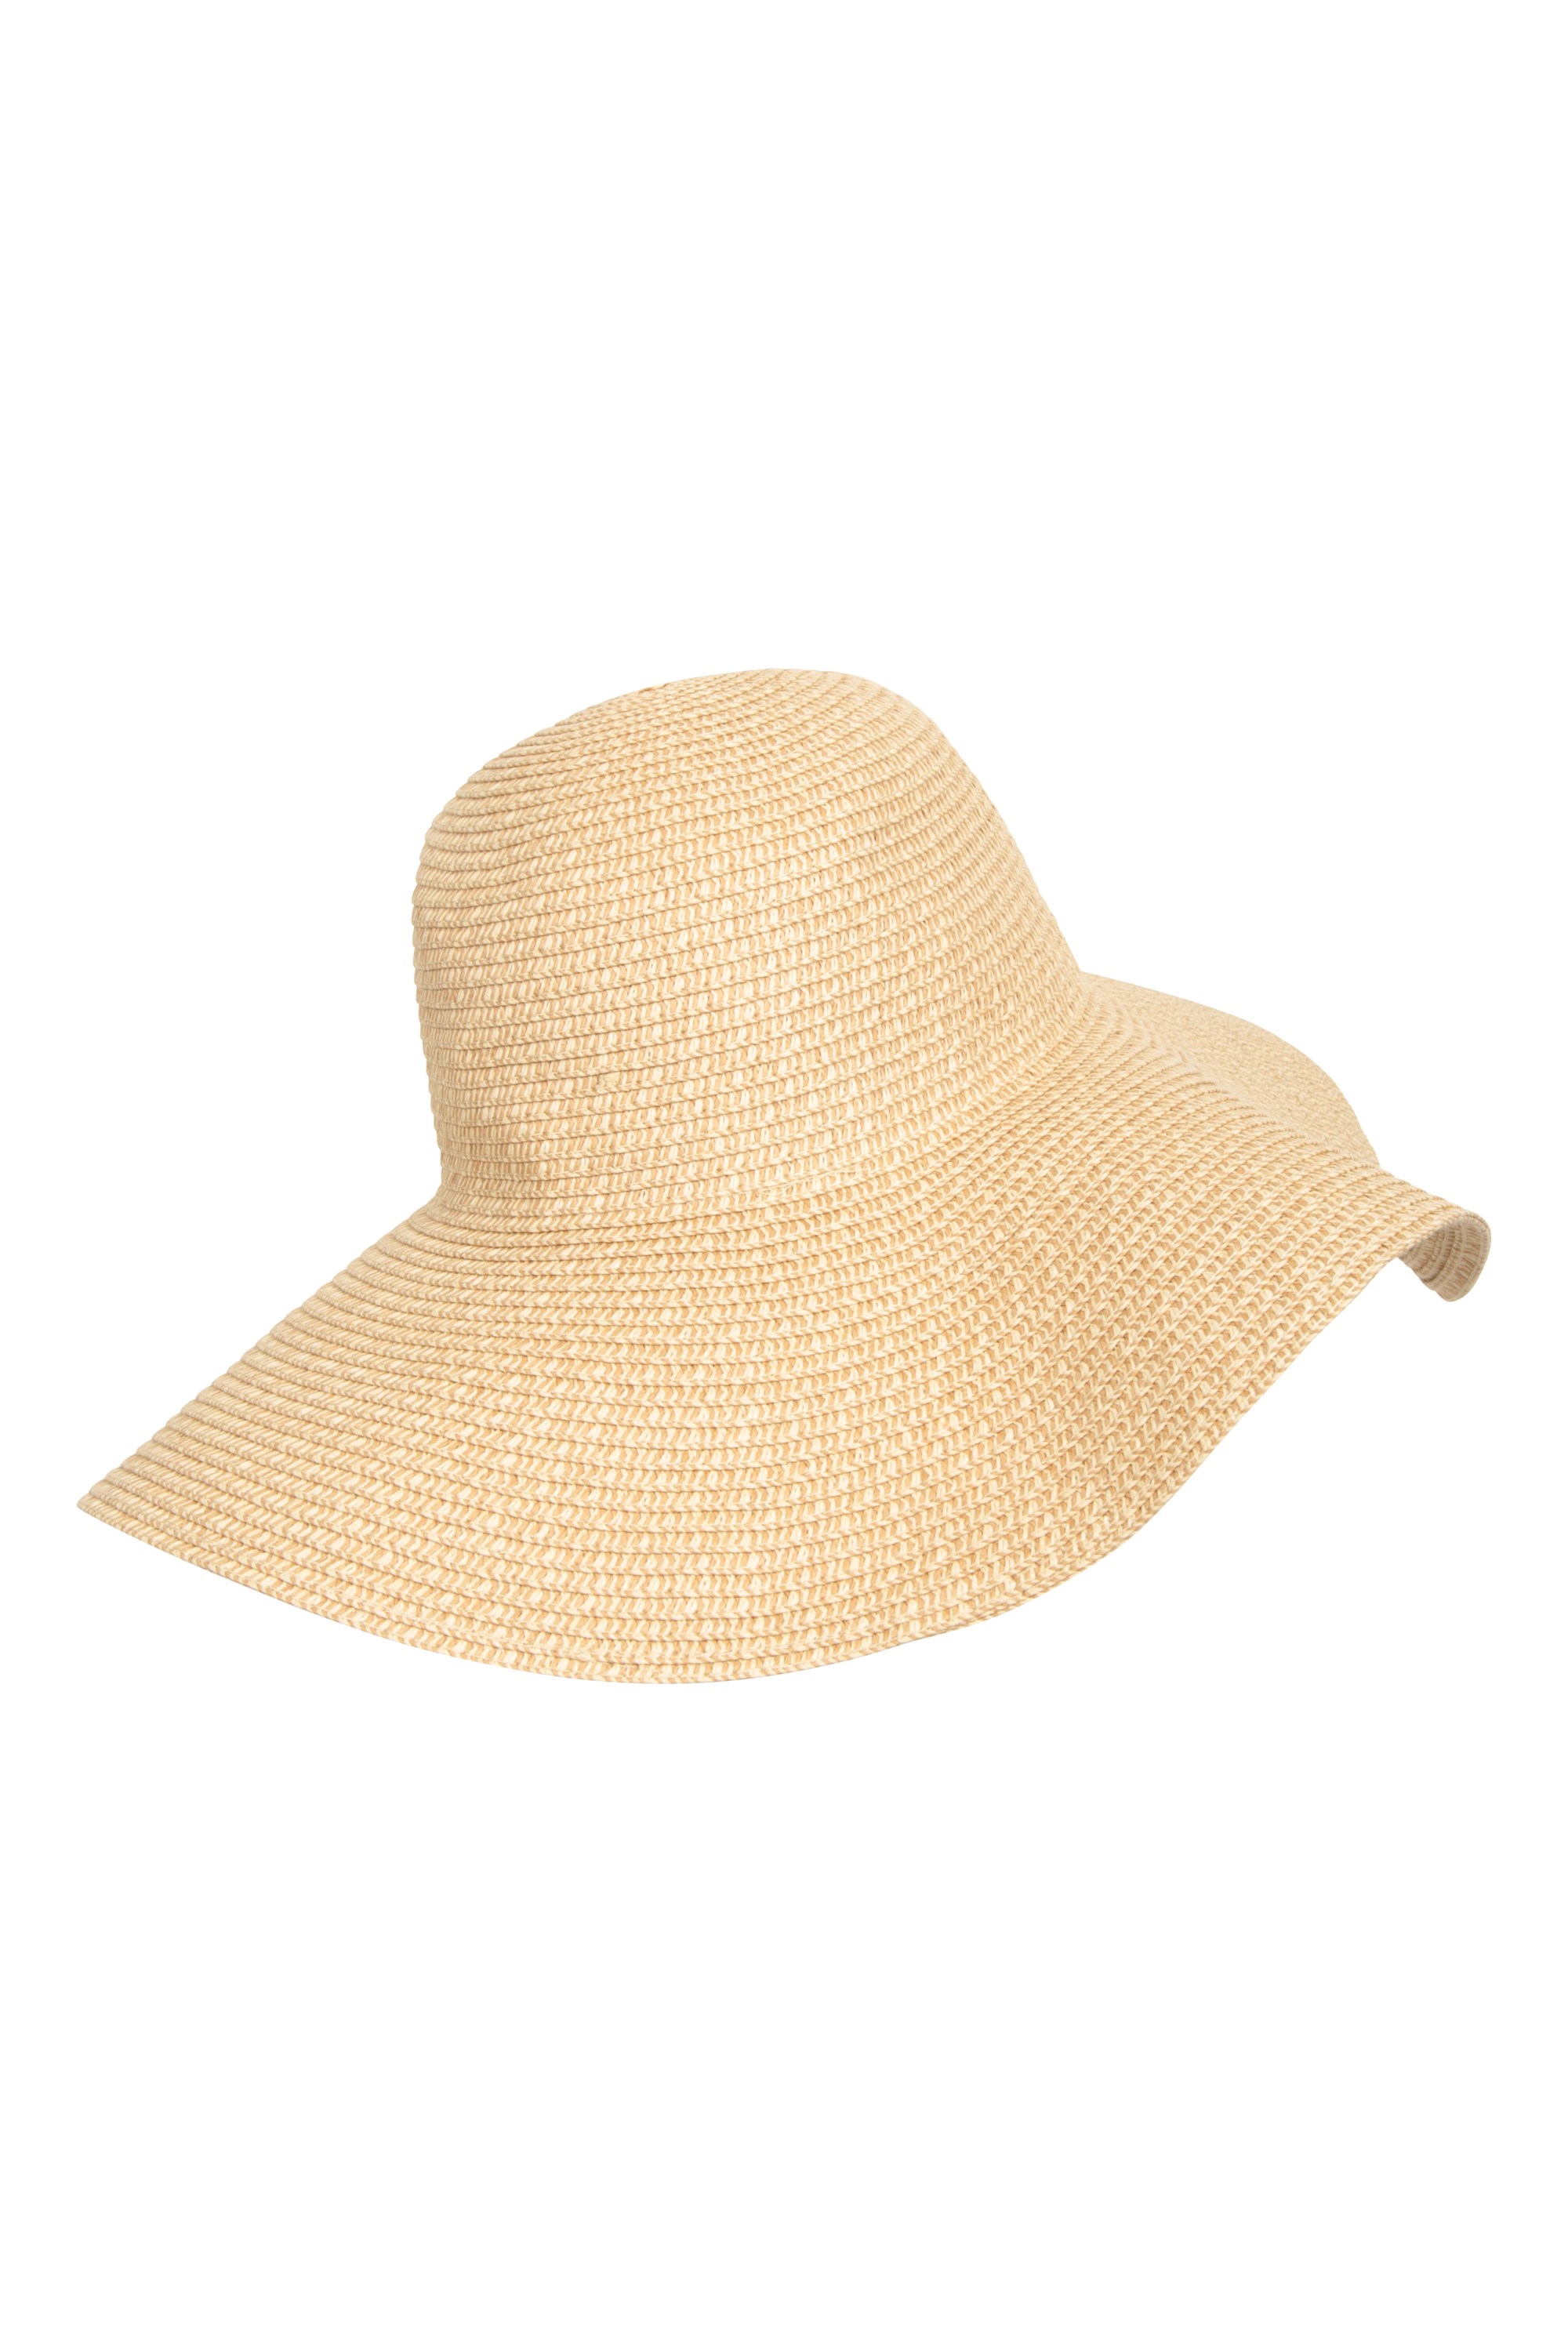 Lily Womens Floppy Sun Hat